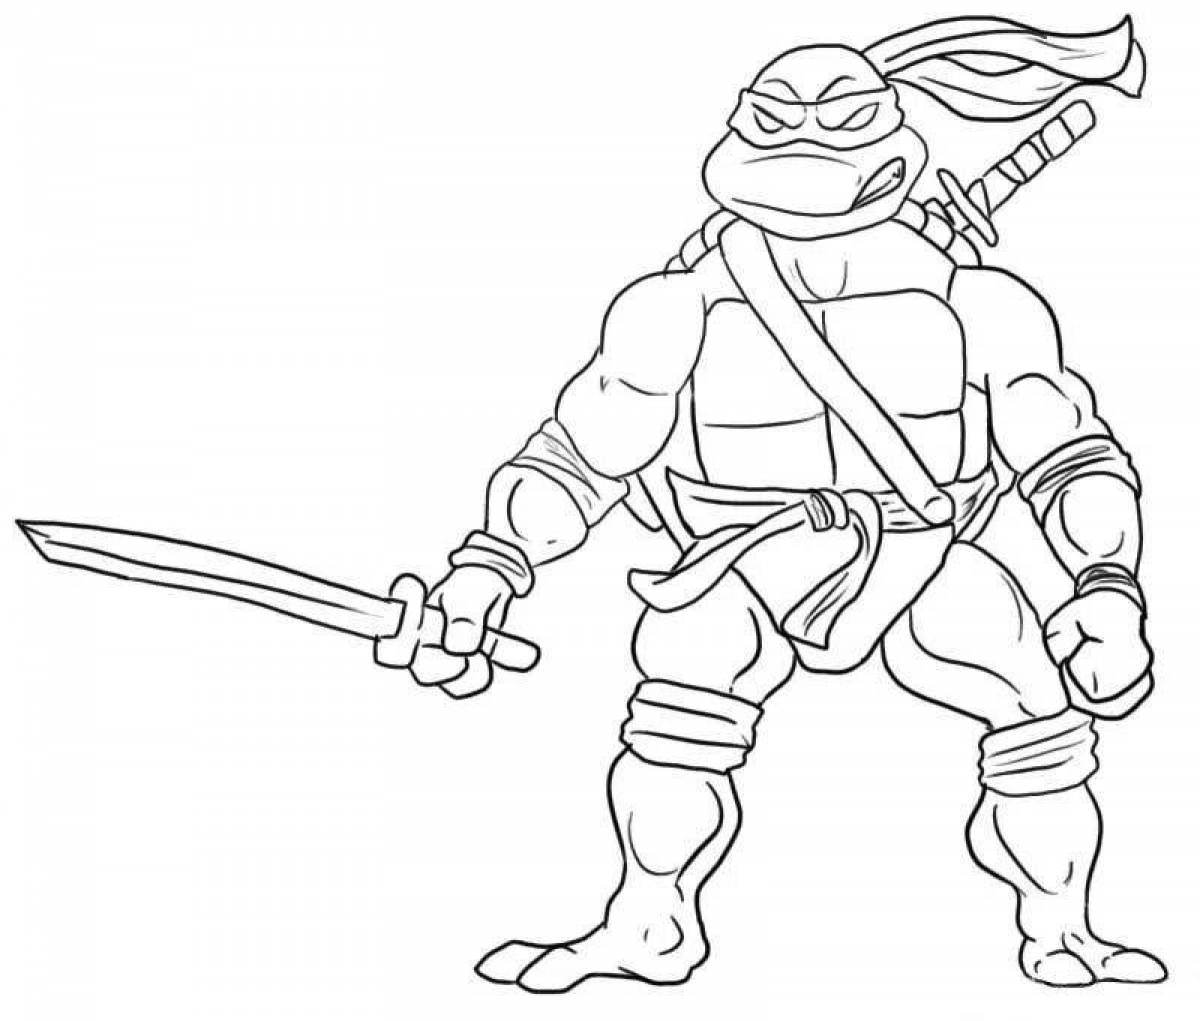 Amazing drawing of the Teenage Mutant Ninja Turtles